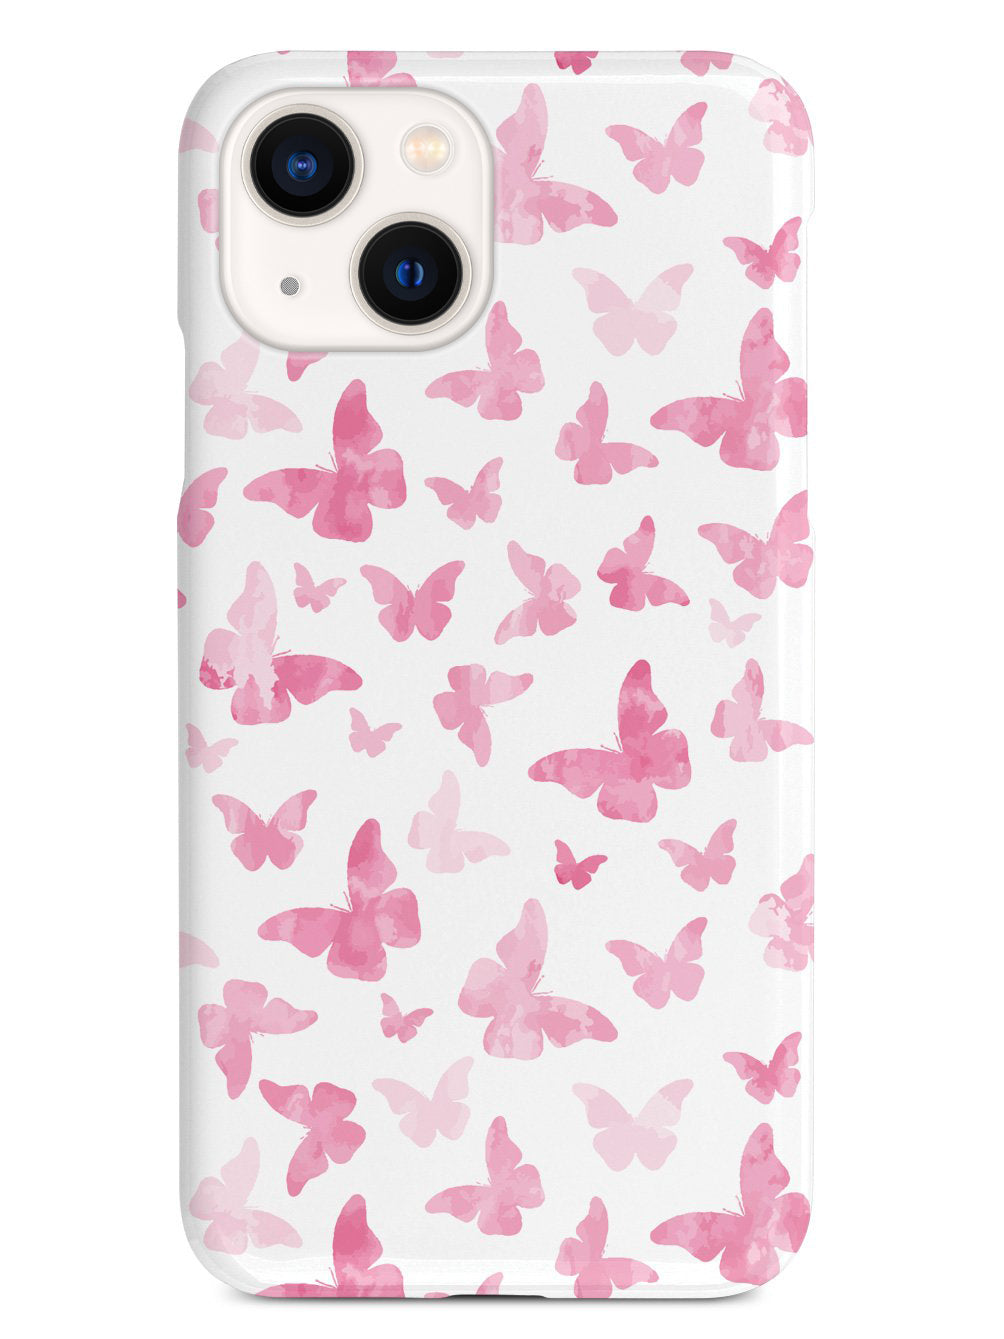 Pink Butterflies - White Case